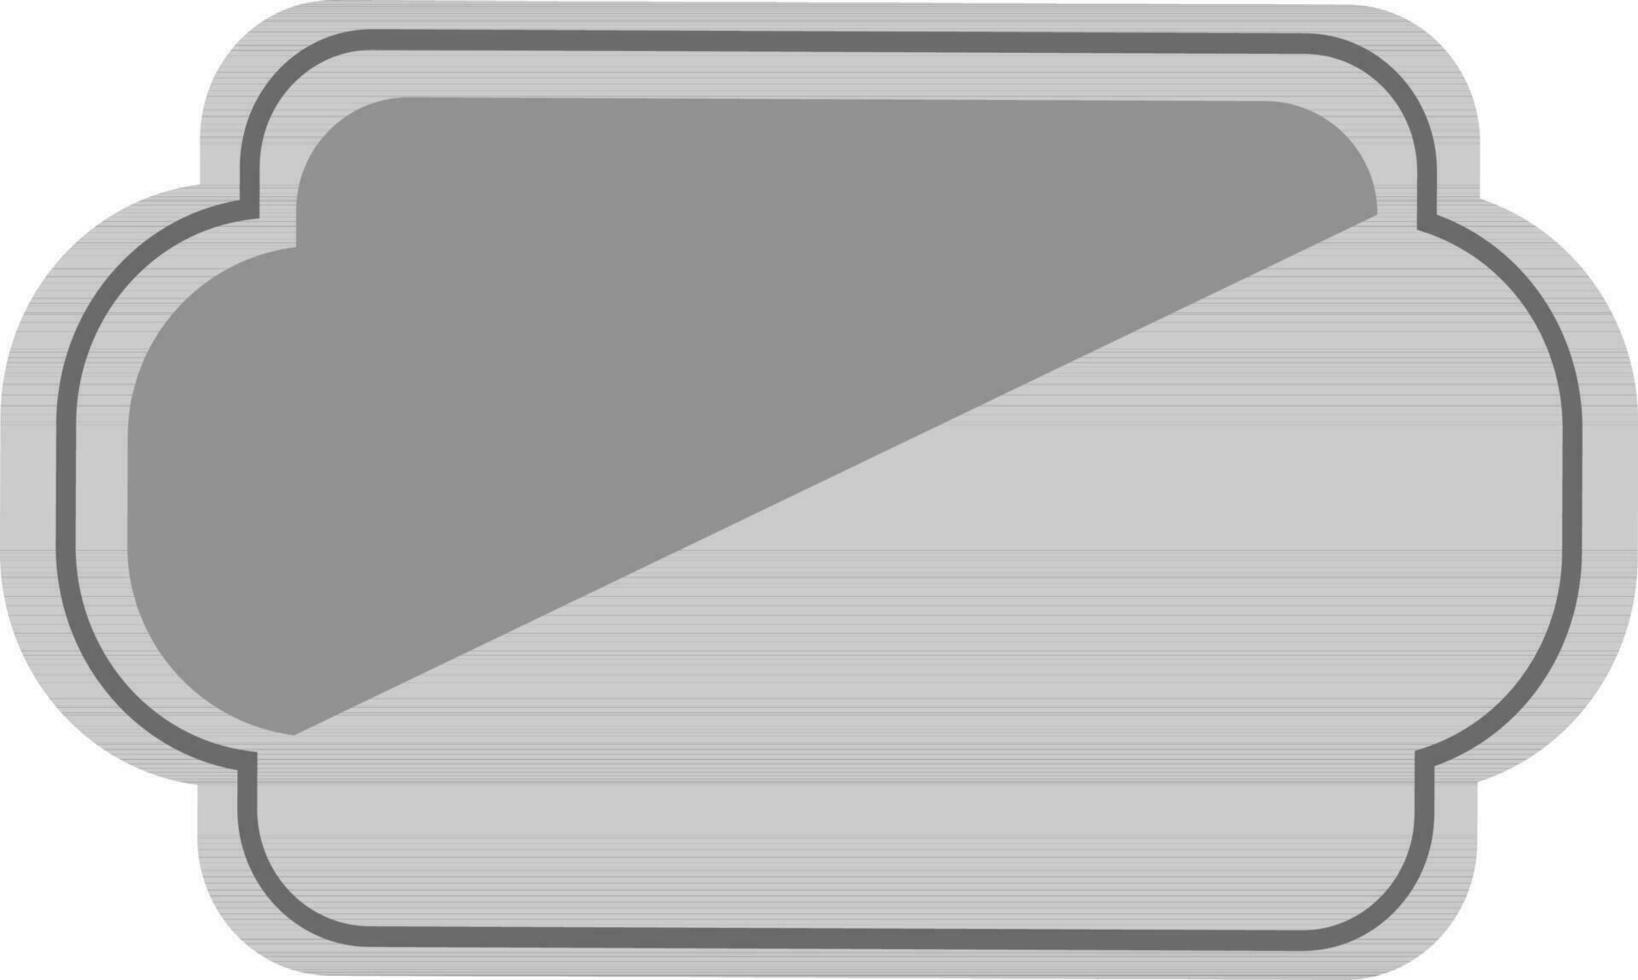 Blank gray ribbon or sticker. vector